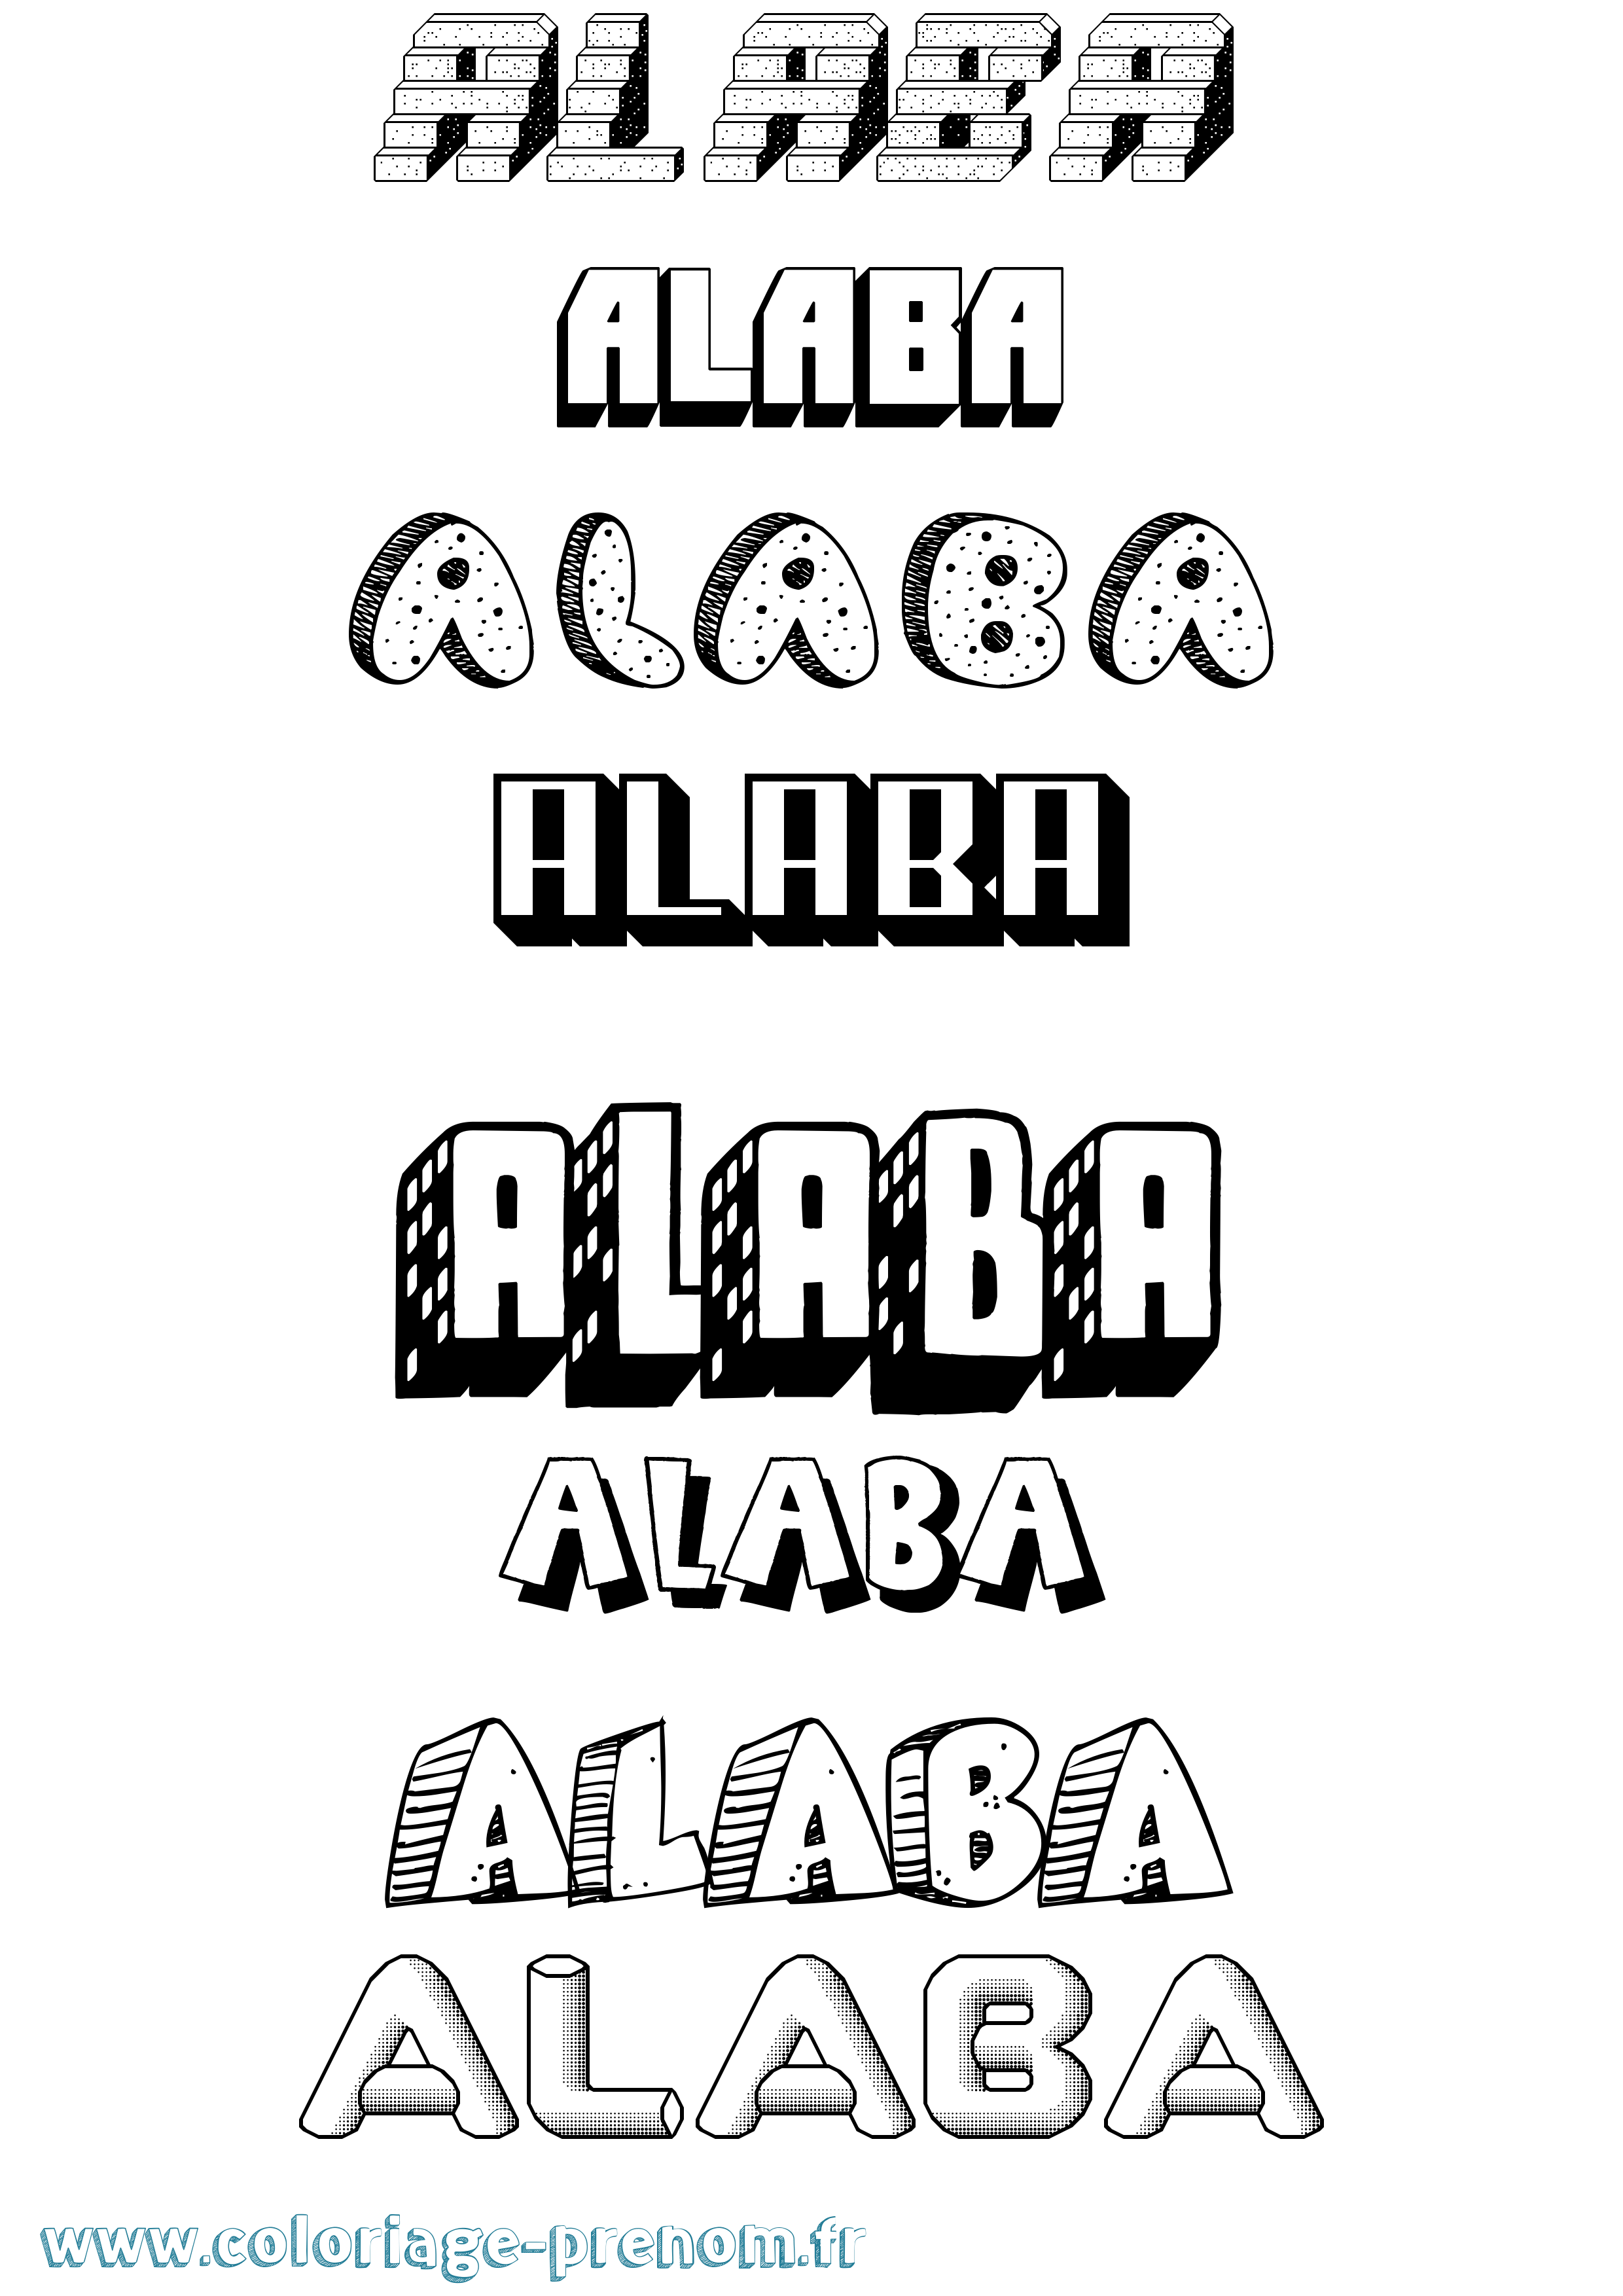 Coloriage prénom Alaba Effet 3D